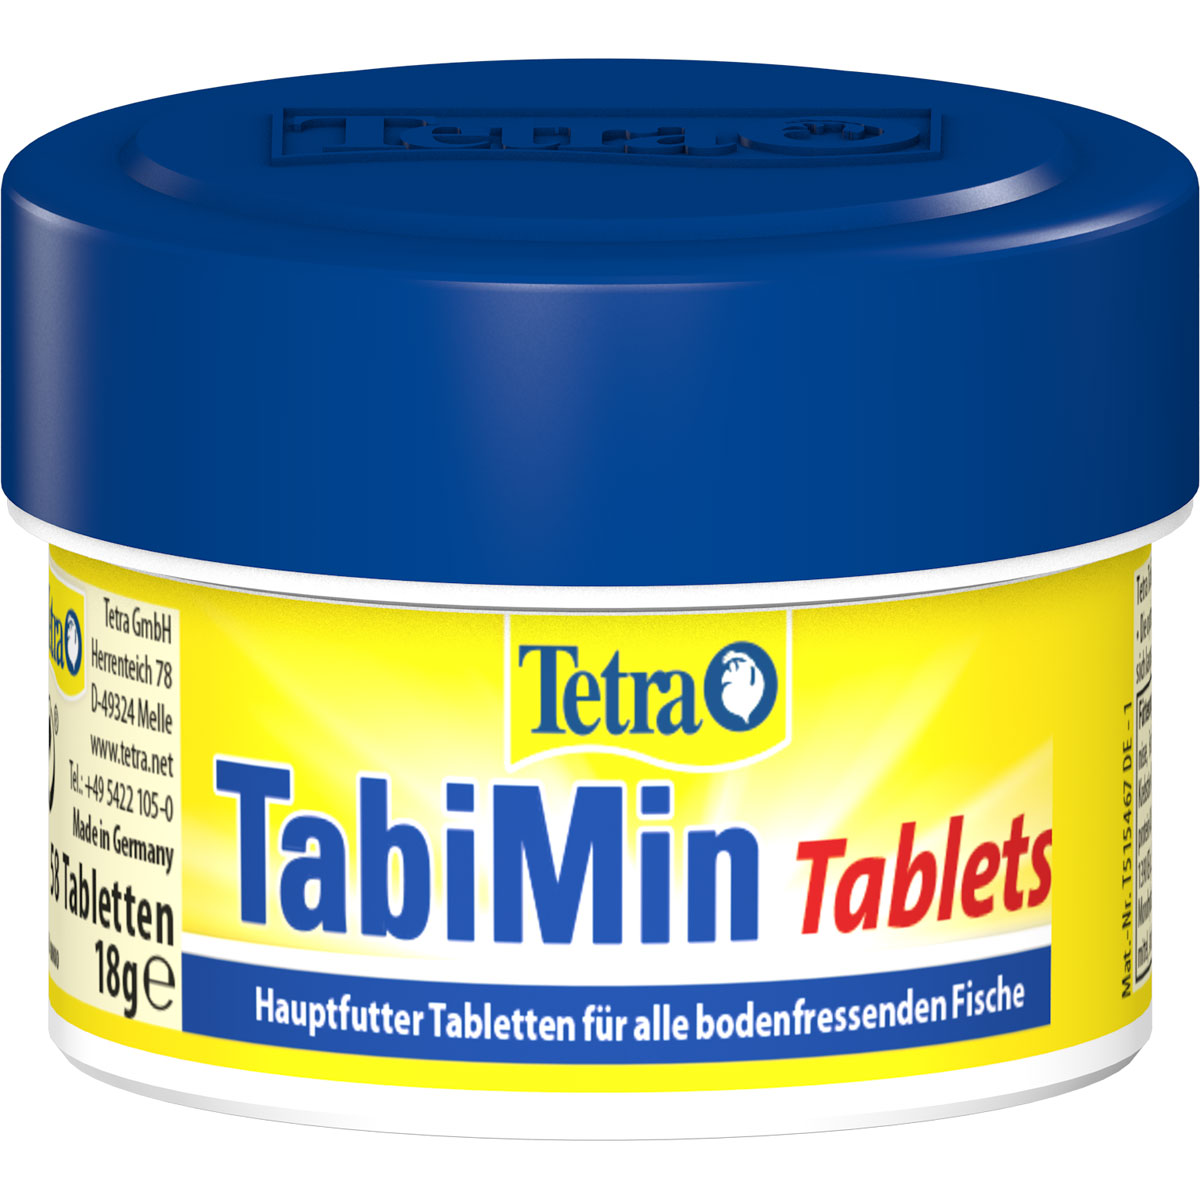 Tetra Tablets TabiMin XL - 133 Tabletten kaufen bei ZooRoyal